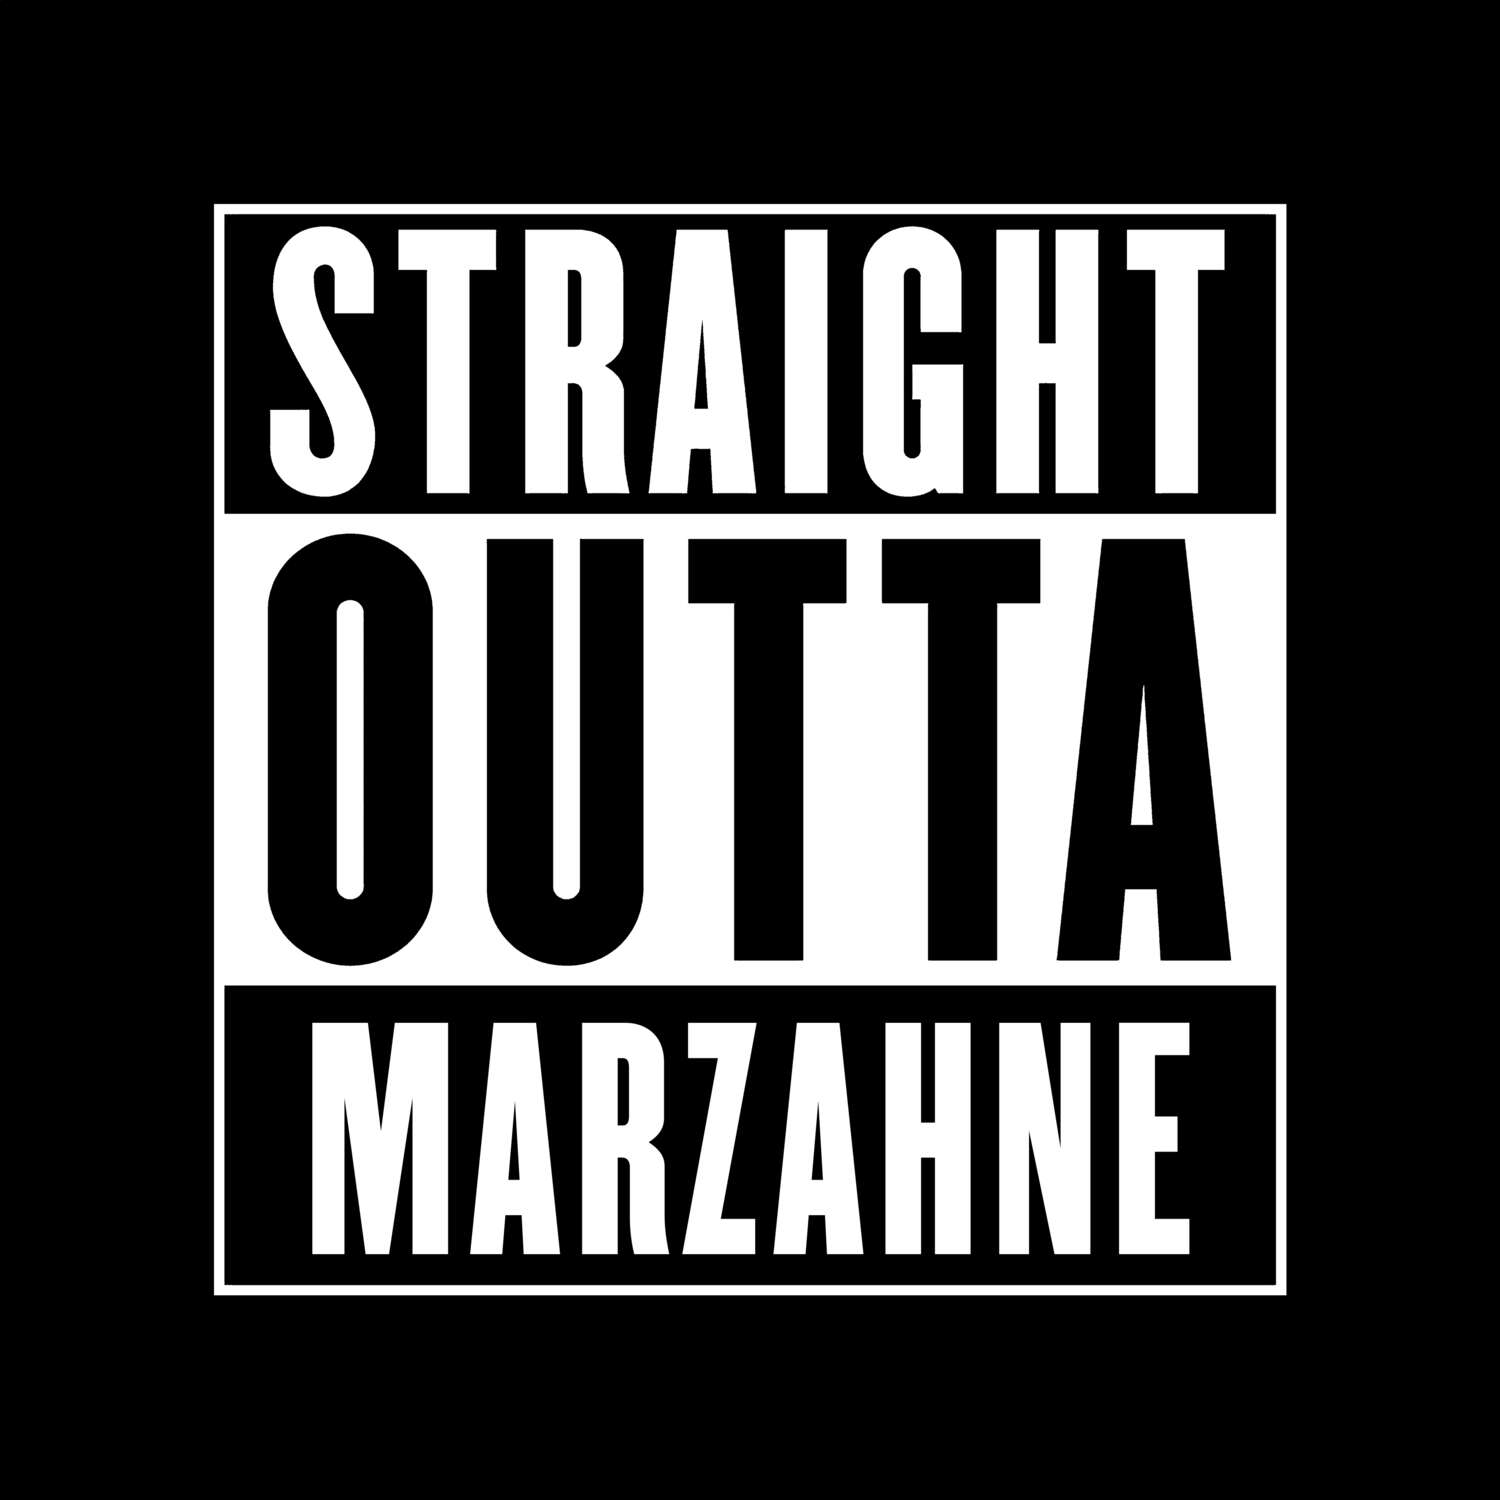 Marzahne T-Shirt »Straight Outta«